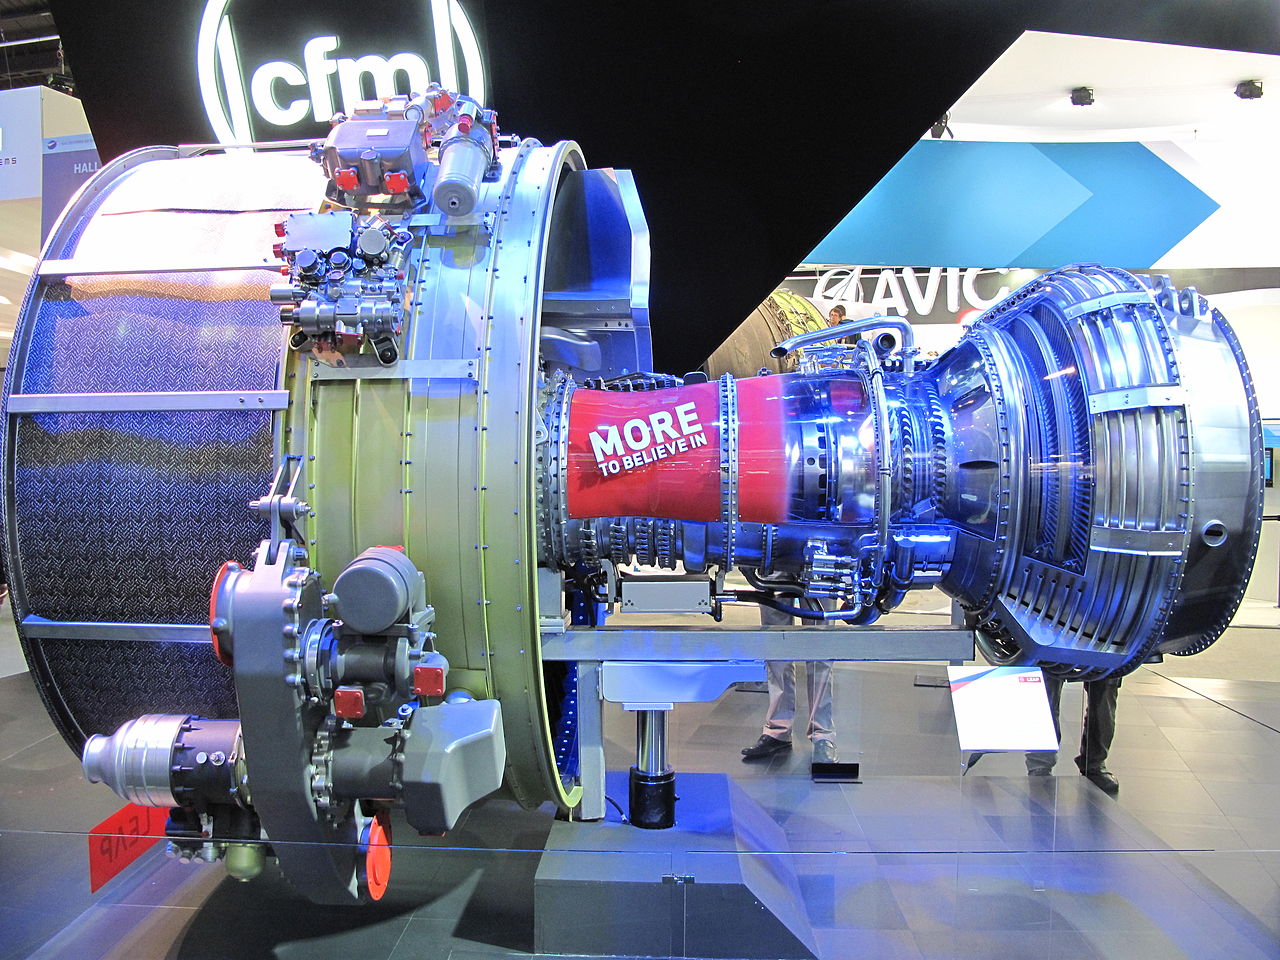 A CFM Turbofan LEAP engine at the 2013 Paris Air Show.